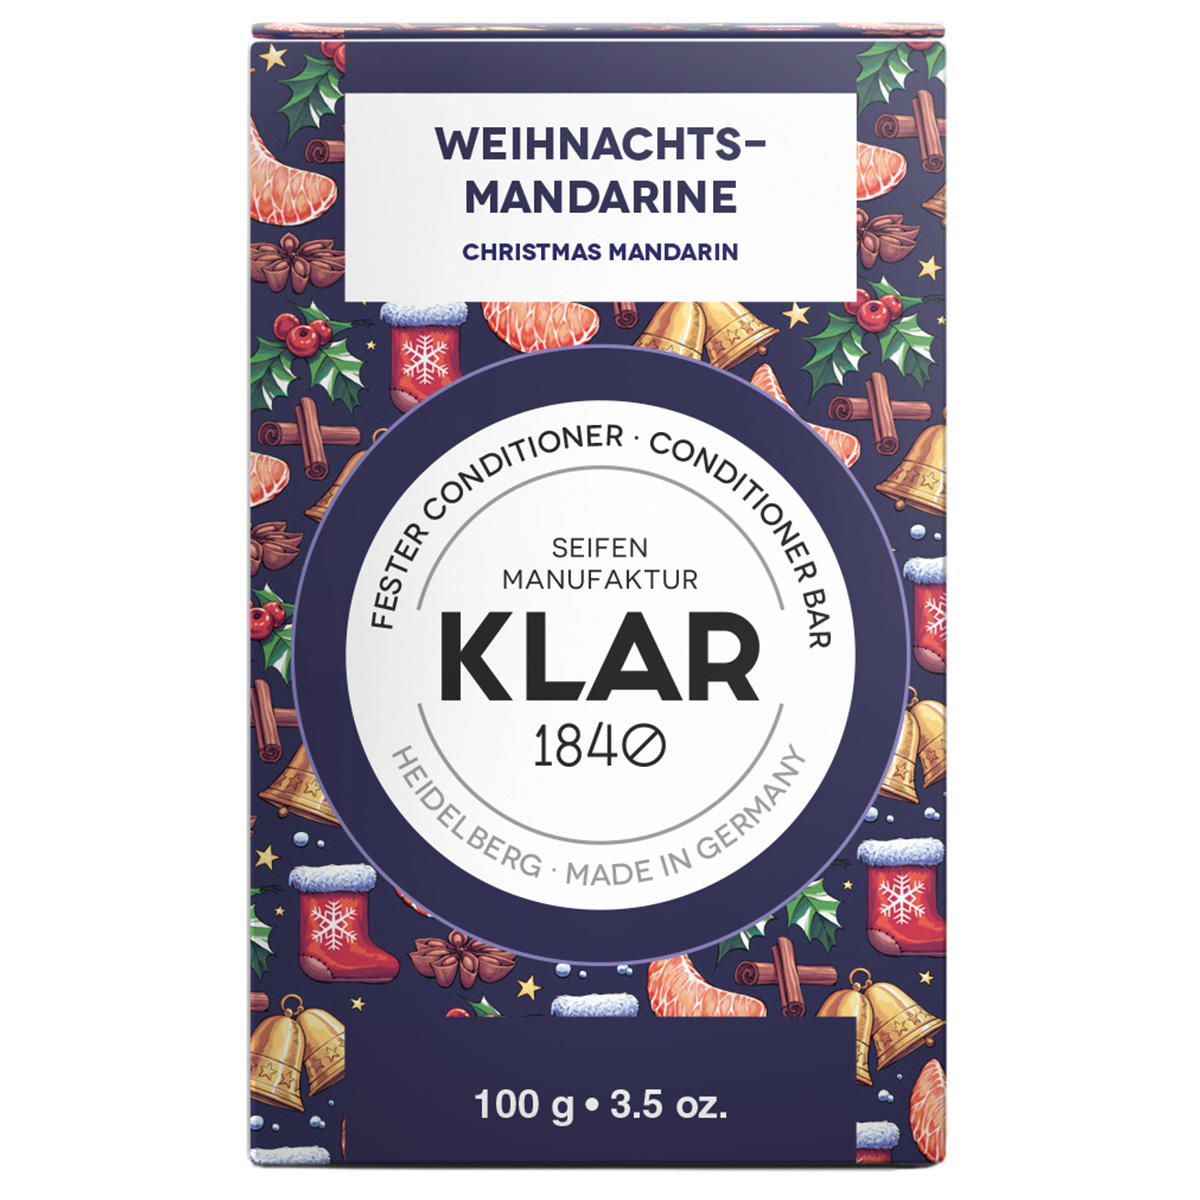 KLAR Solid Conditioner Kerst Mandarijn 100 g - 1